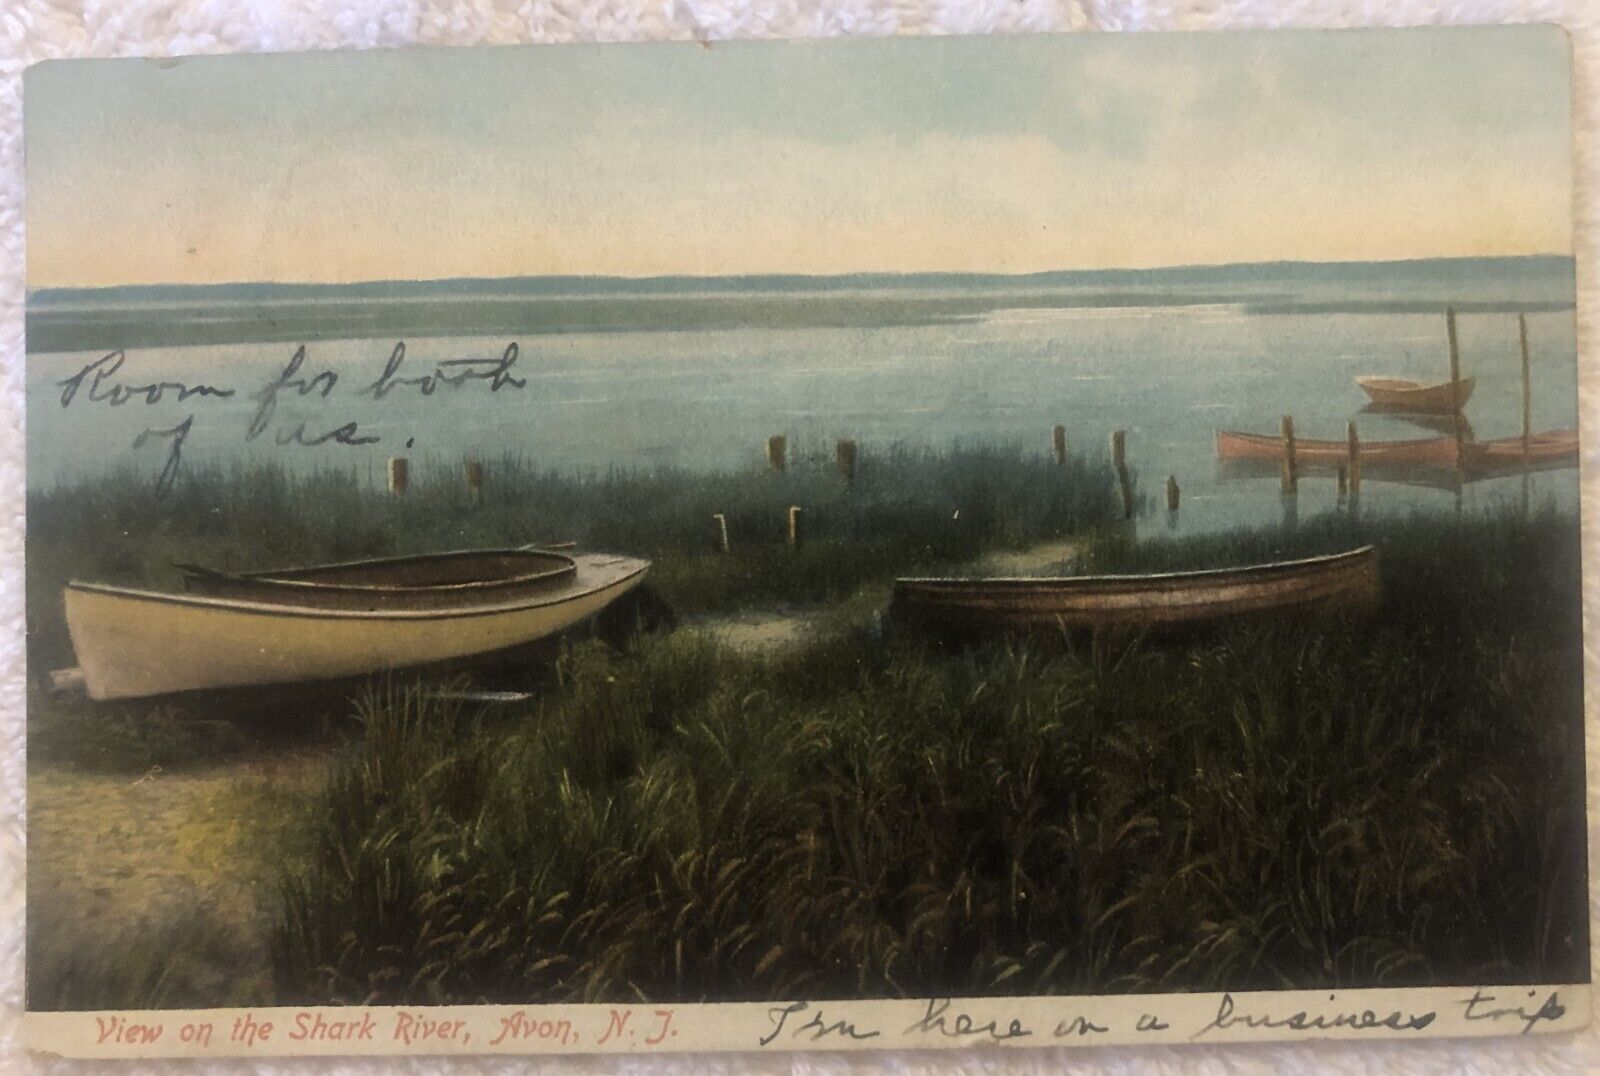 Vintage Post Card Shark River, Avon N.J. Posted 1910, Litho Chrome